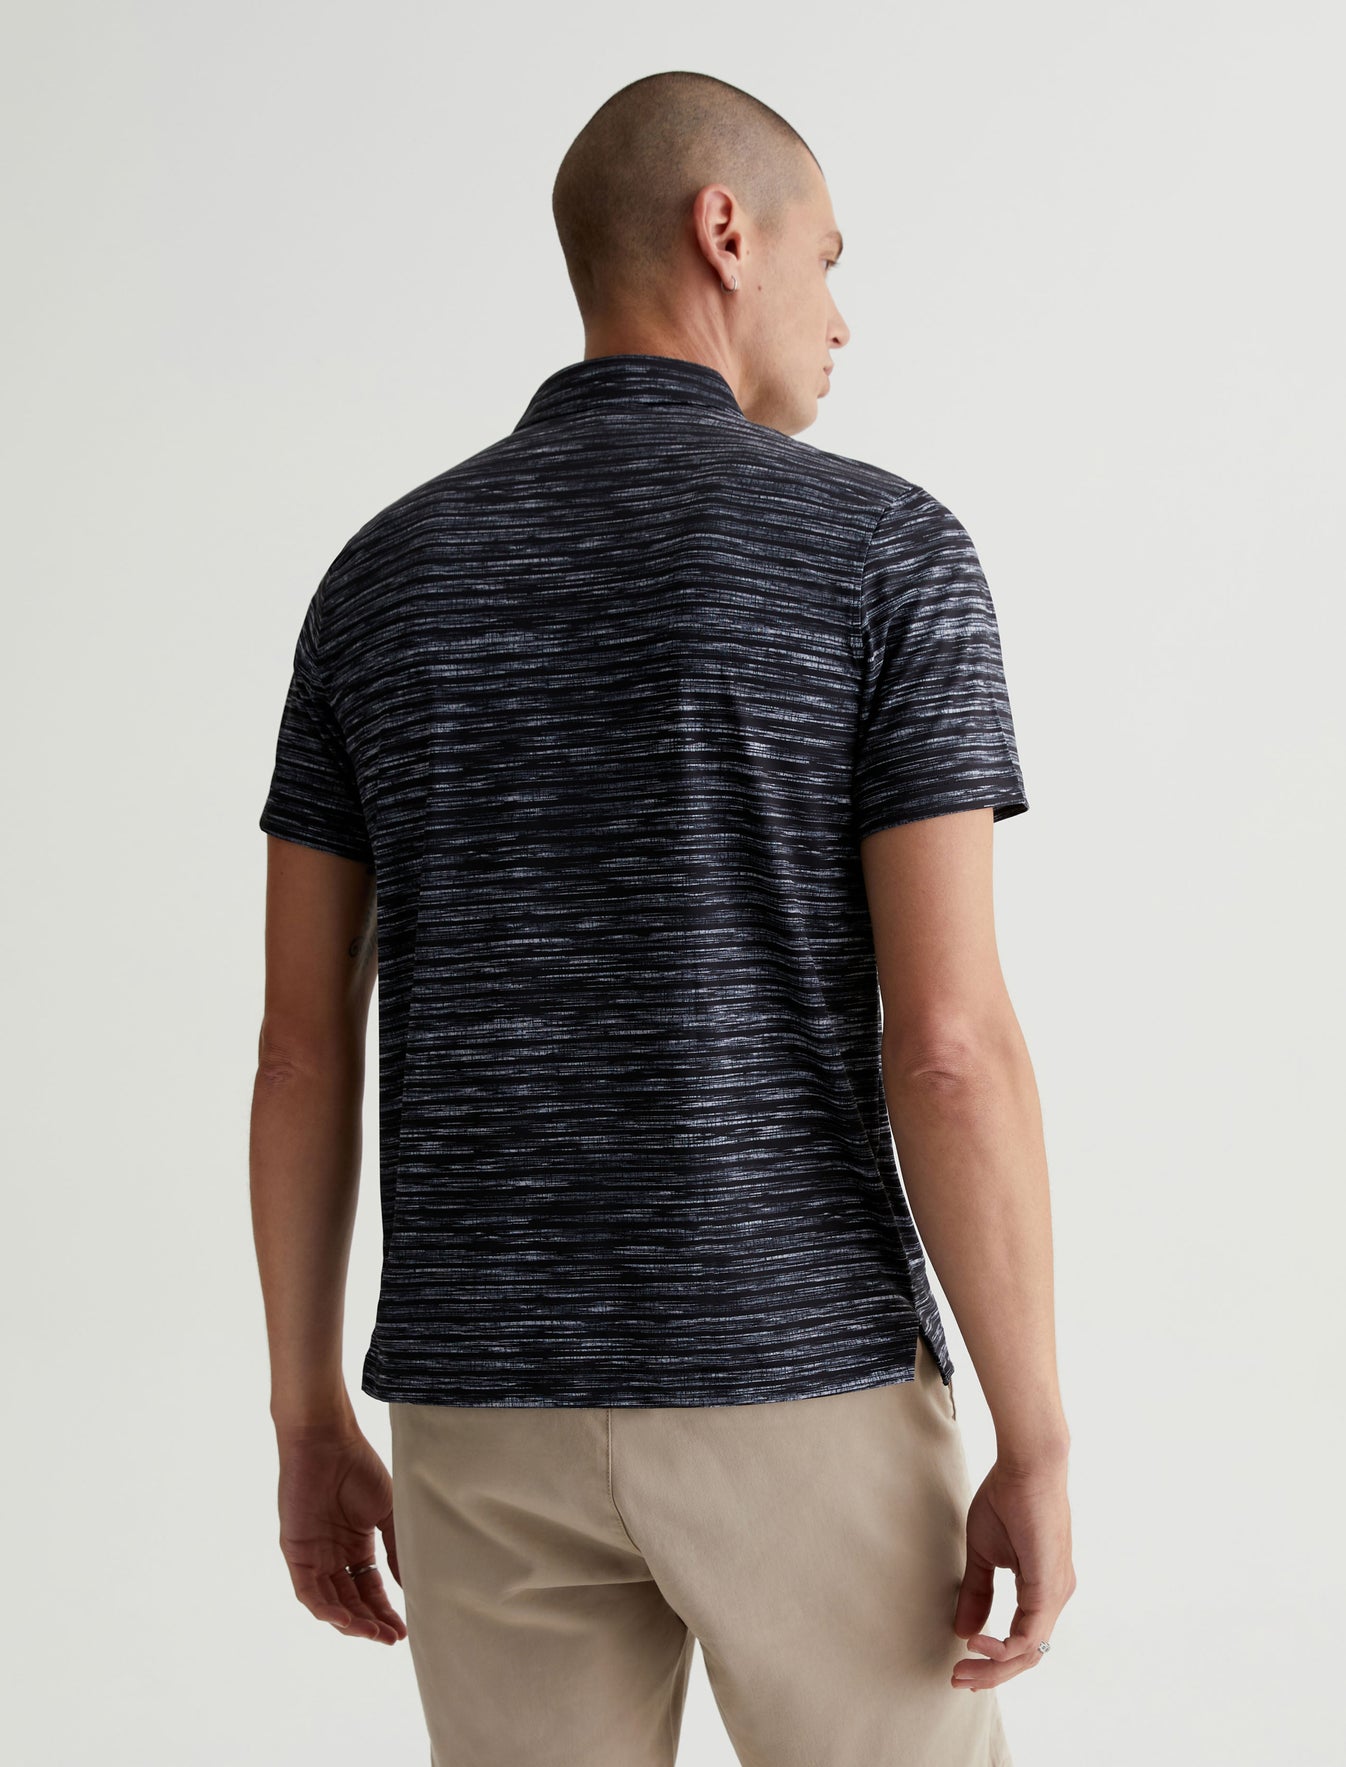 Bryce S/S Polo Slub Stripe Black Classic Fit Short Sleeve Polo T-Shirt Mens Top Photo 6